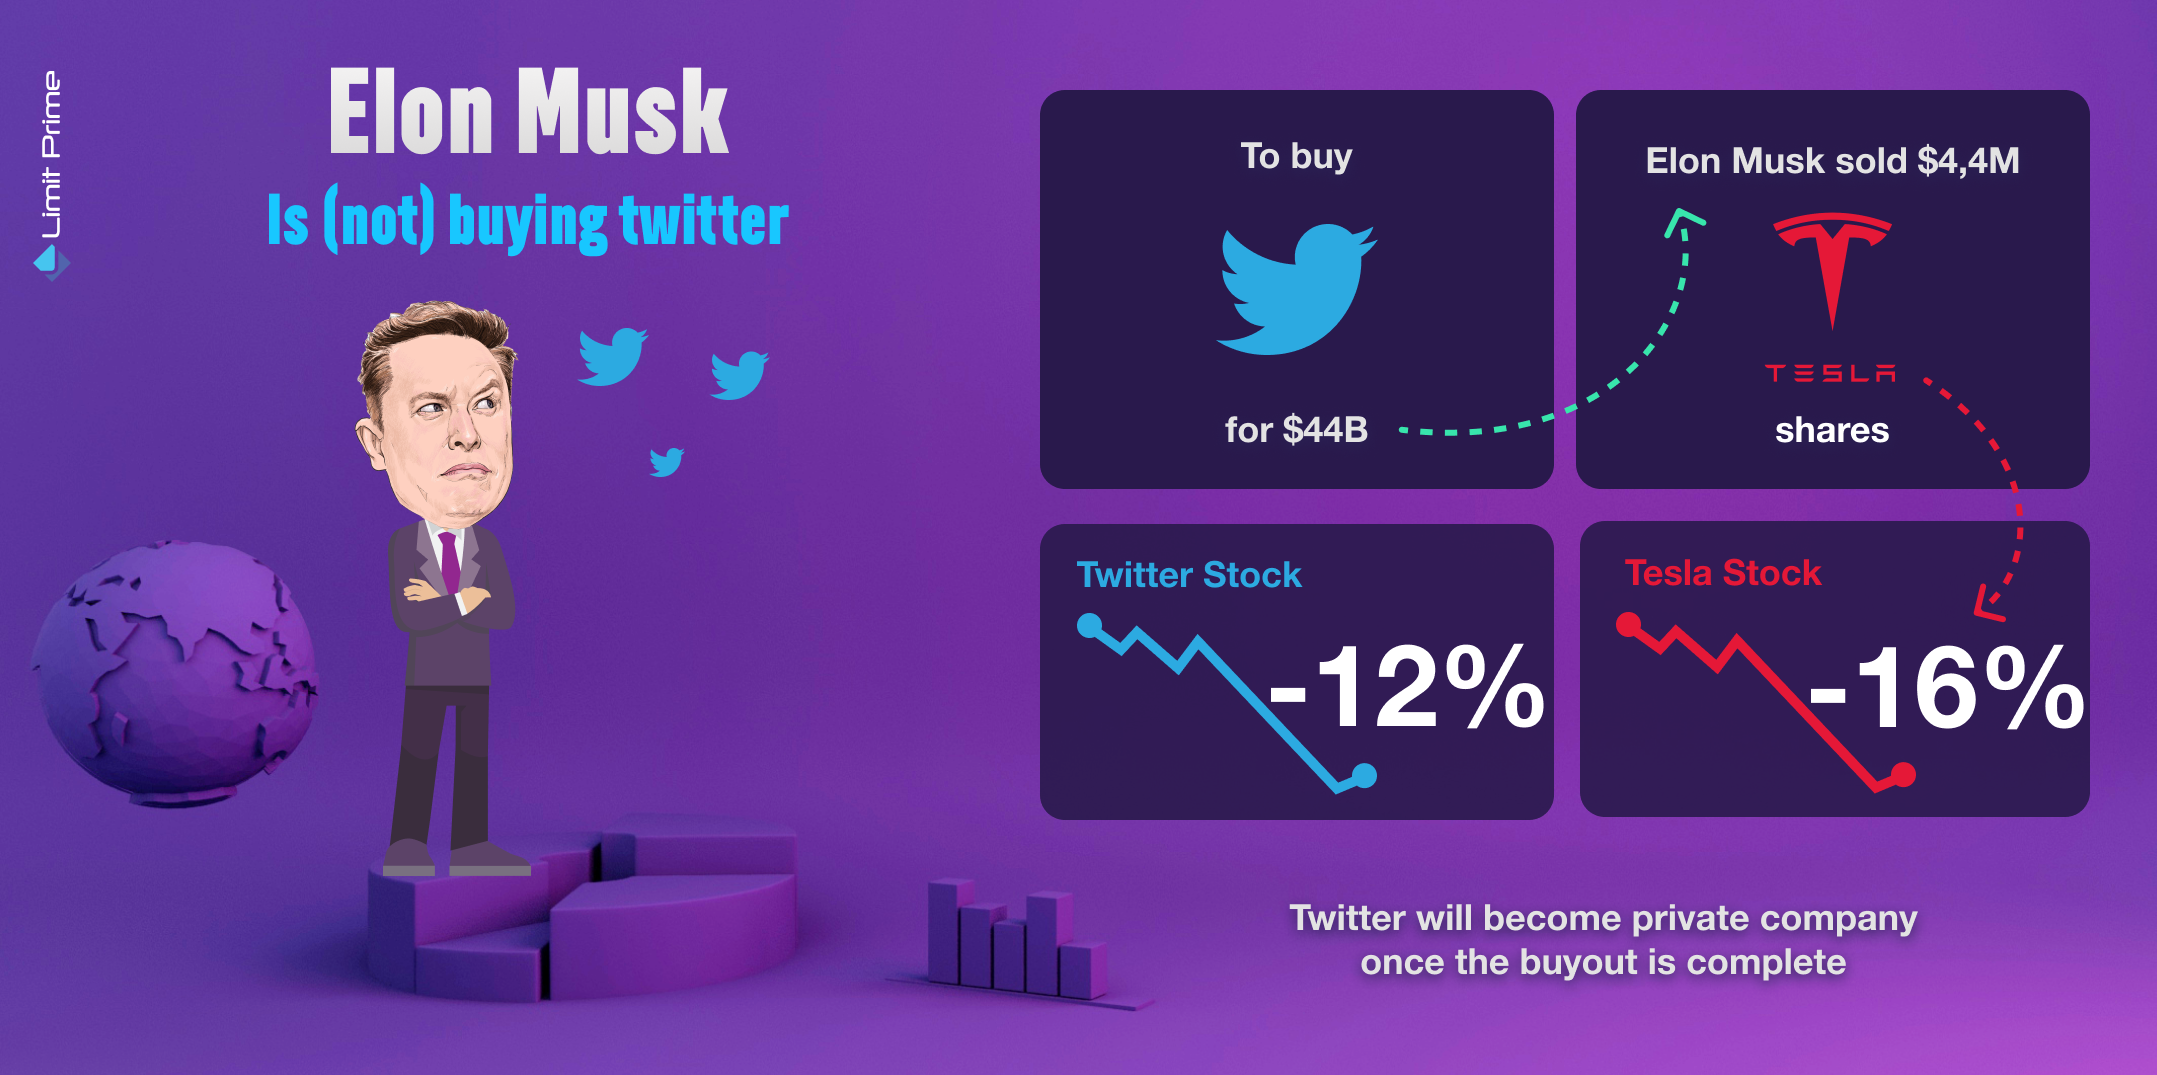 Elon Musk is (not) buying Twitter